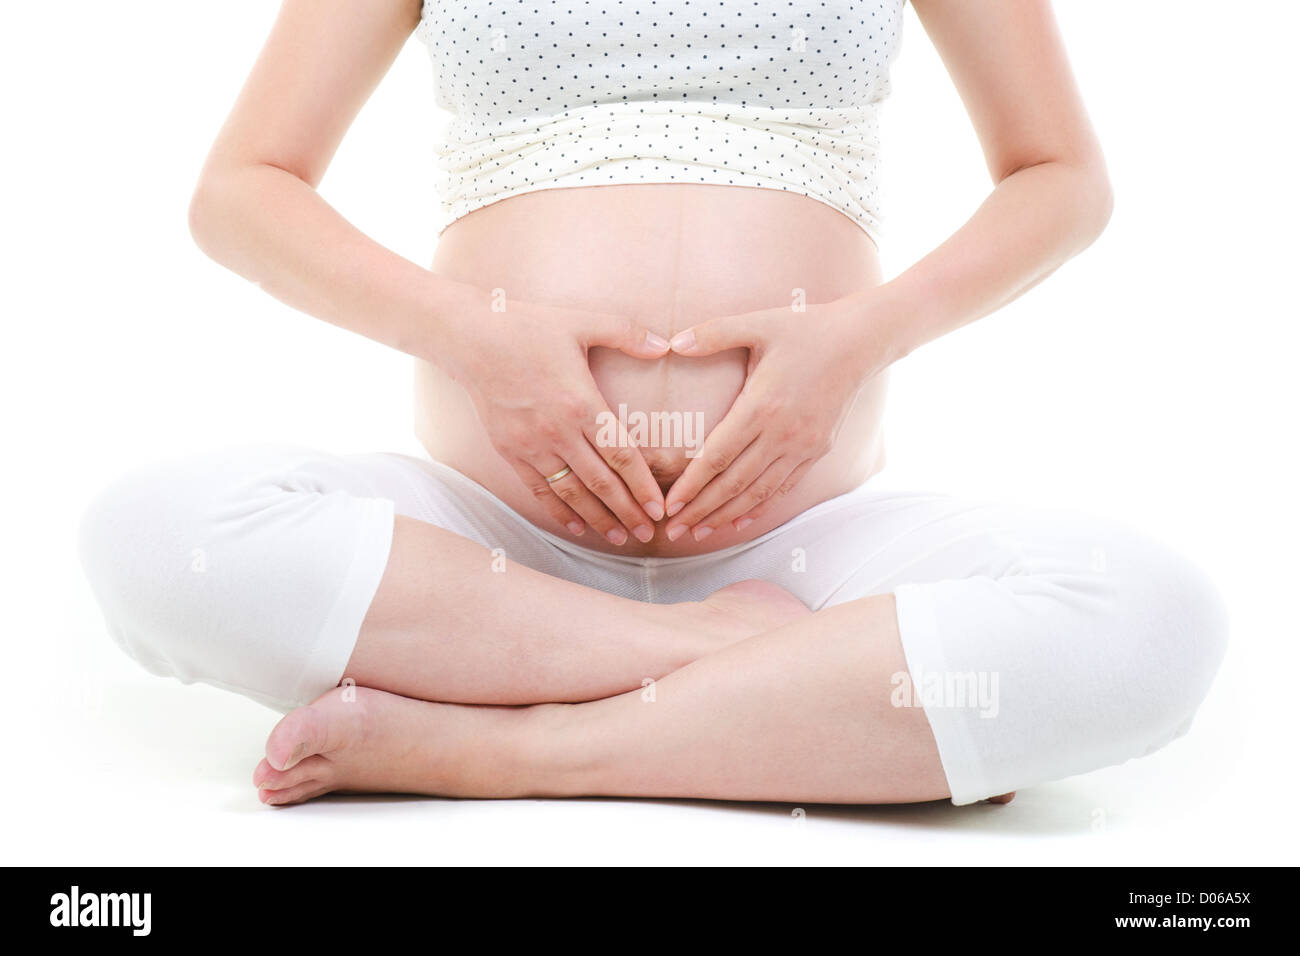 Schwangere Frau bilden Liebe Form am Bauch 8 Monate schwanger Stockfoto